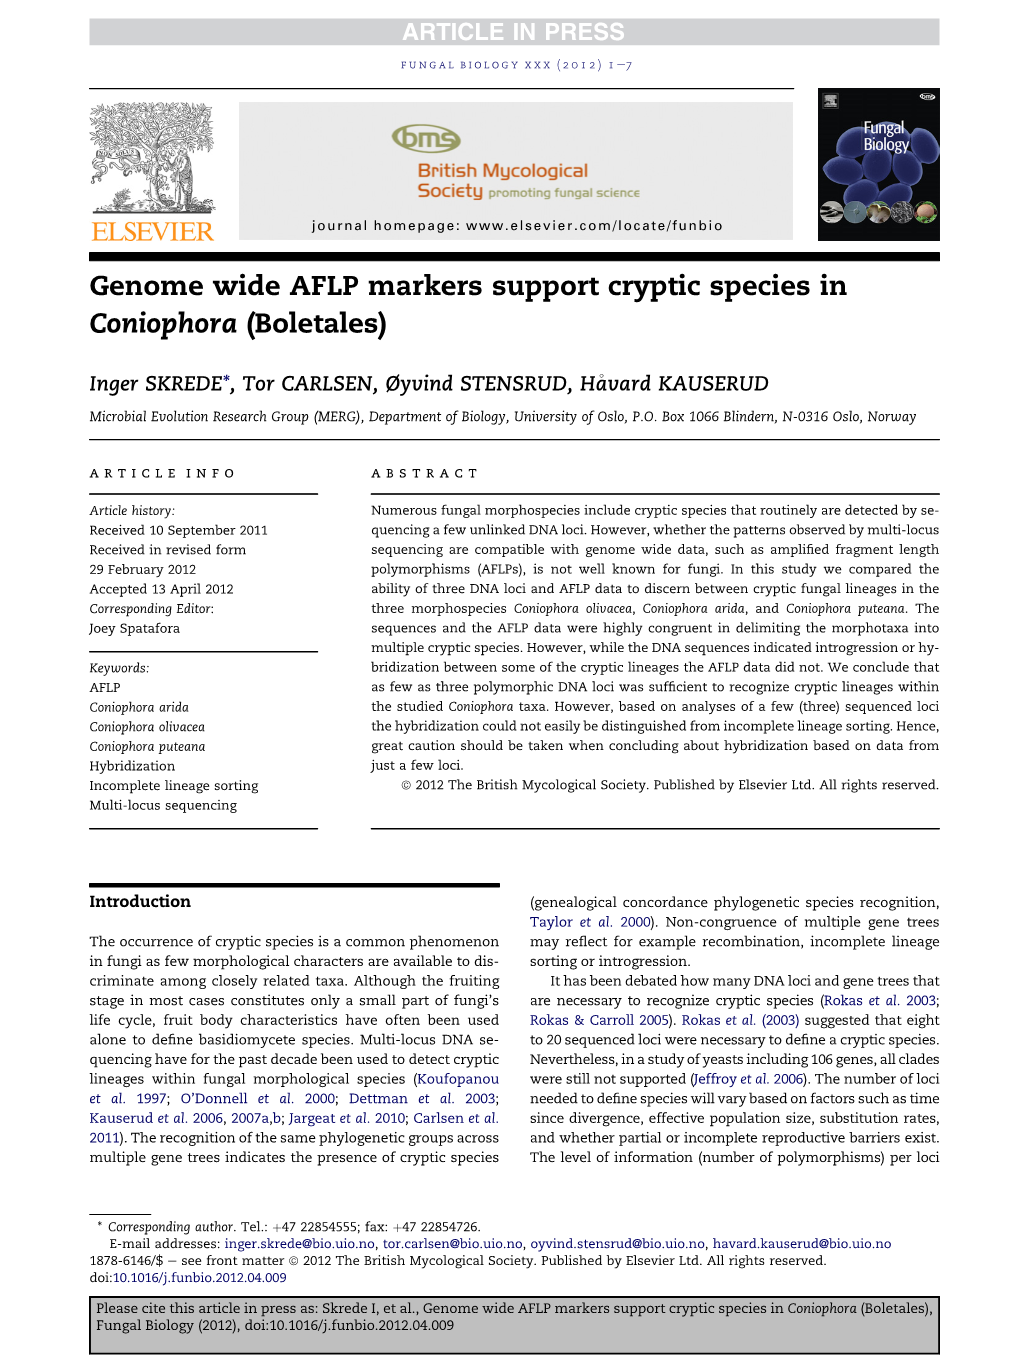 Genome Wide AFLP Markers Support Cryptic Species in Coniophora (Boletales)